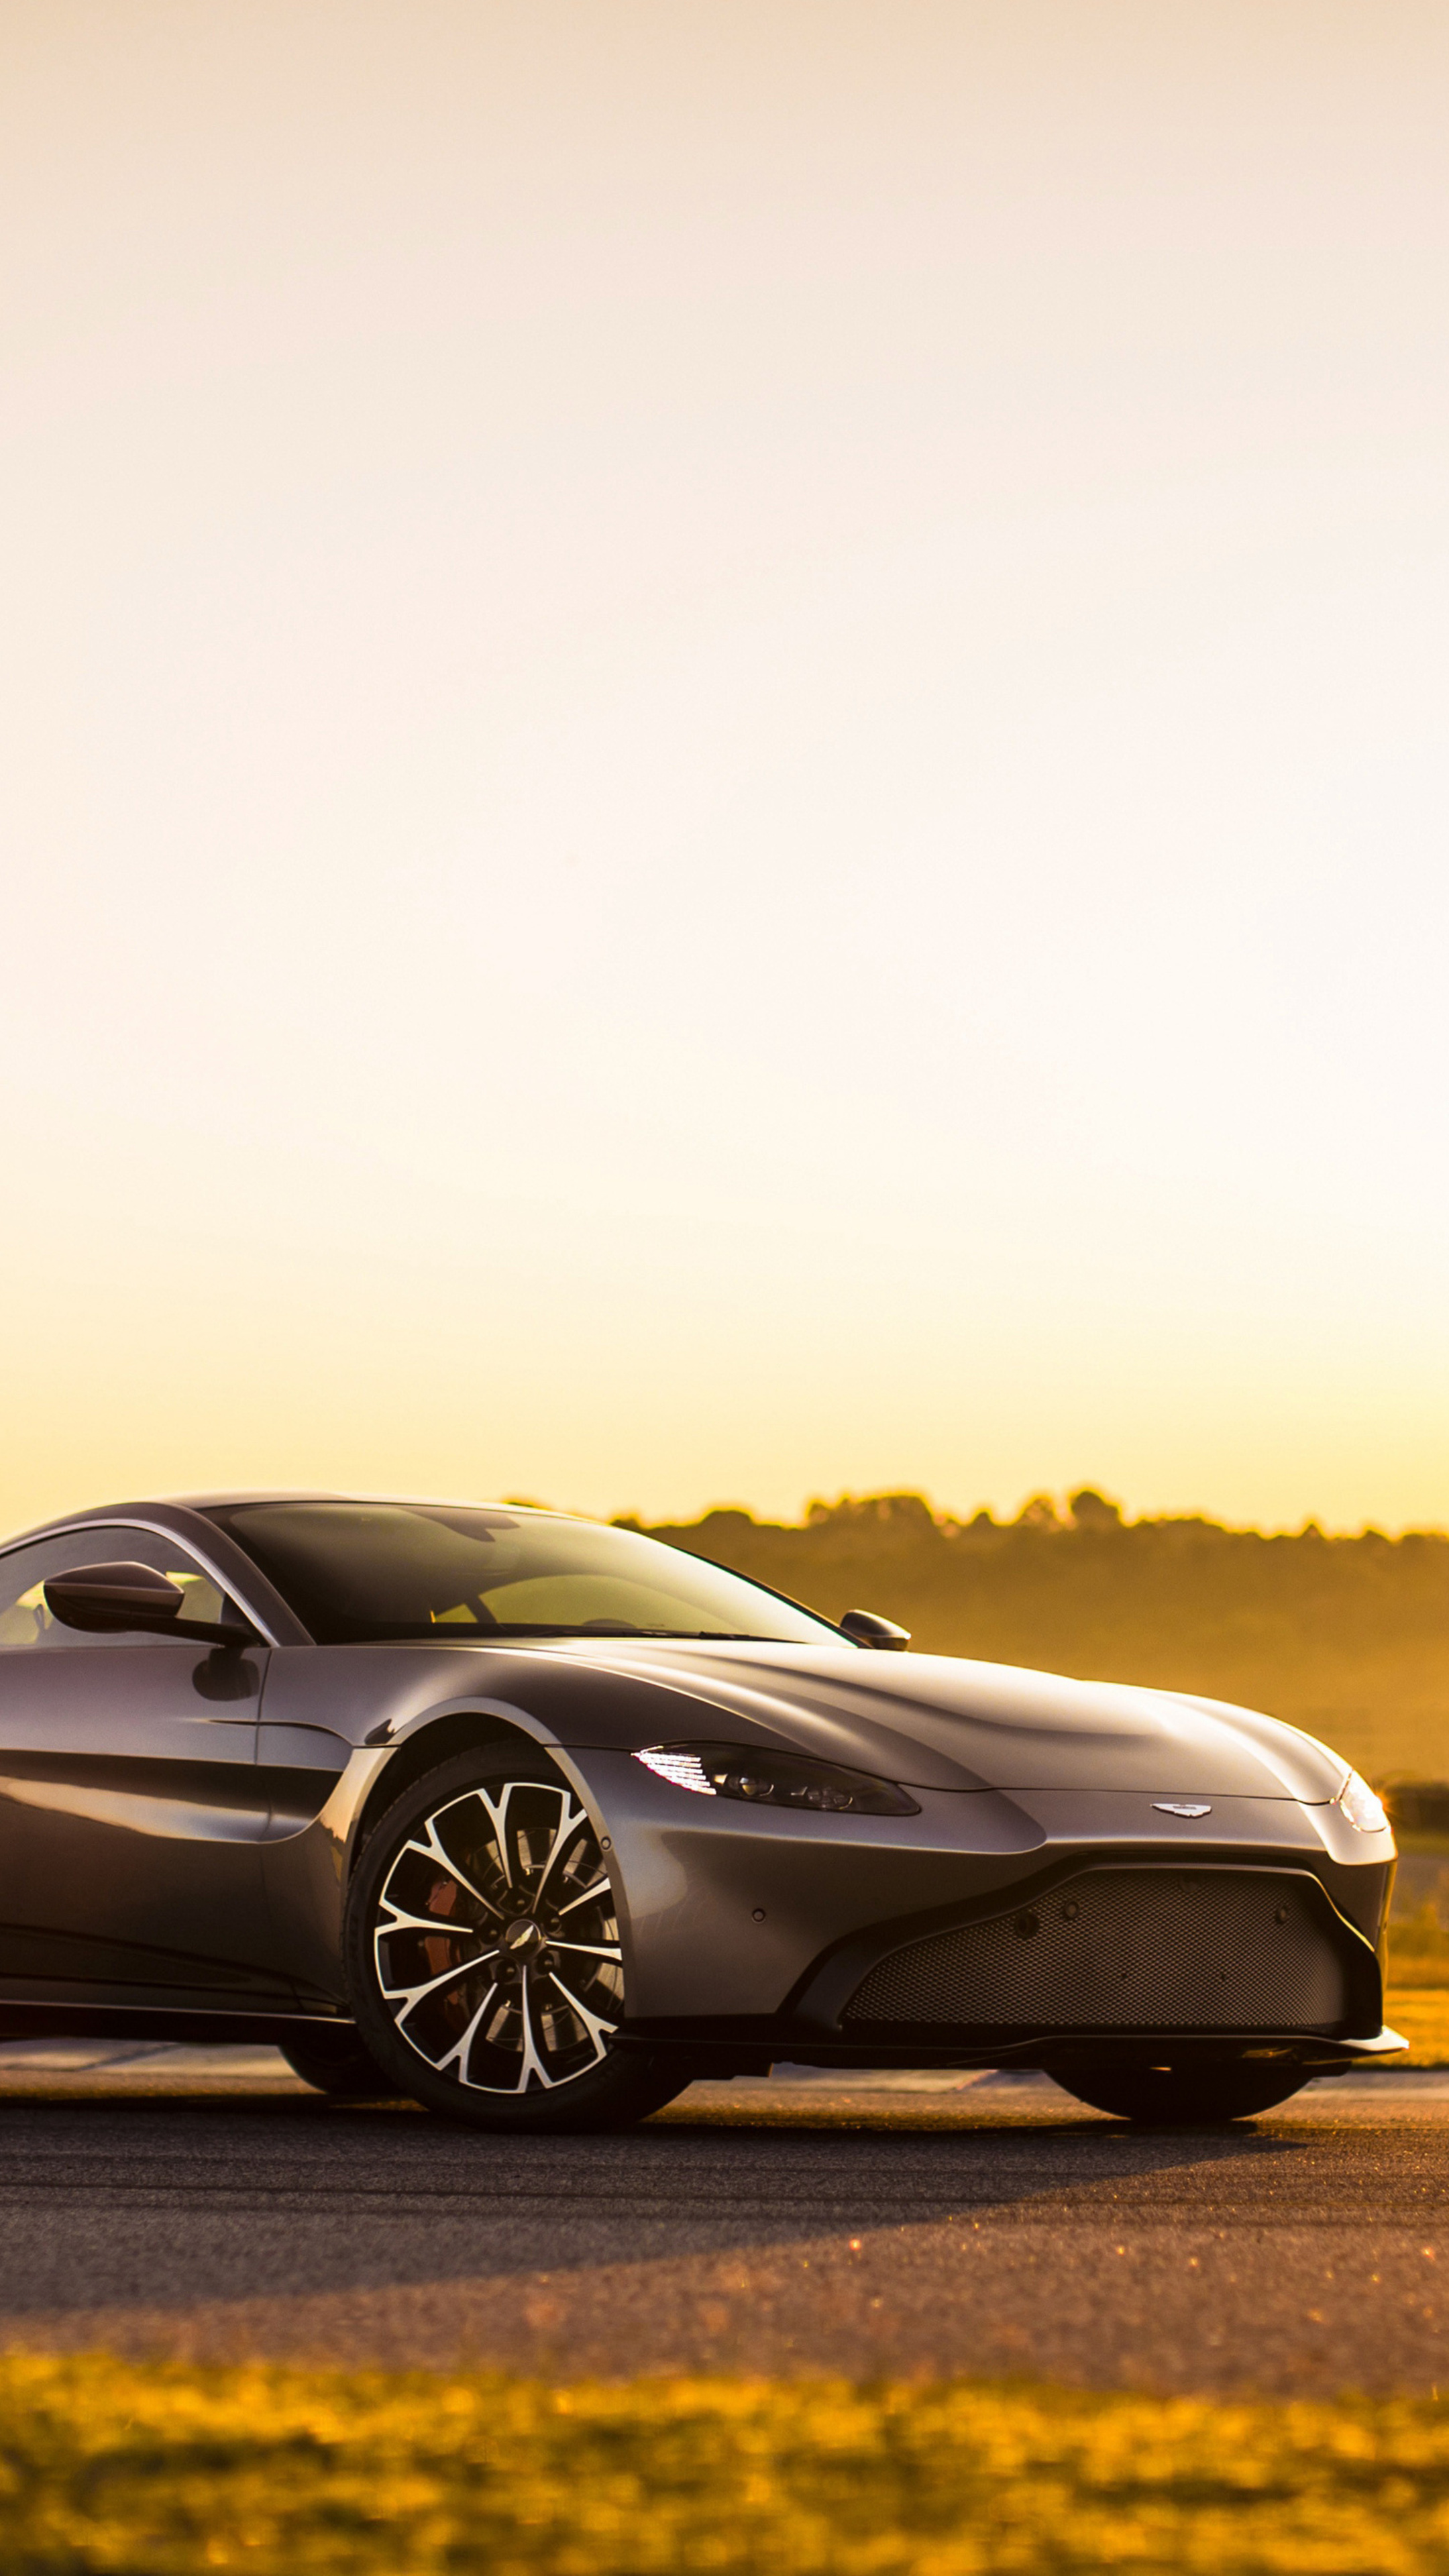 Aston Martin Vantage, Stunning Sony Xperia wallpapers, Premium 4K images, Sports car luxury, 2160x3840 4K Handy